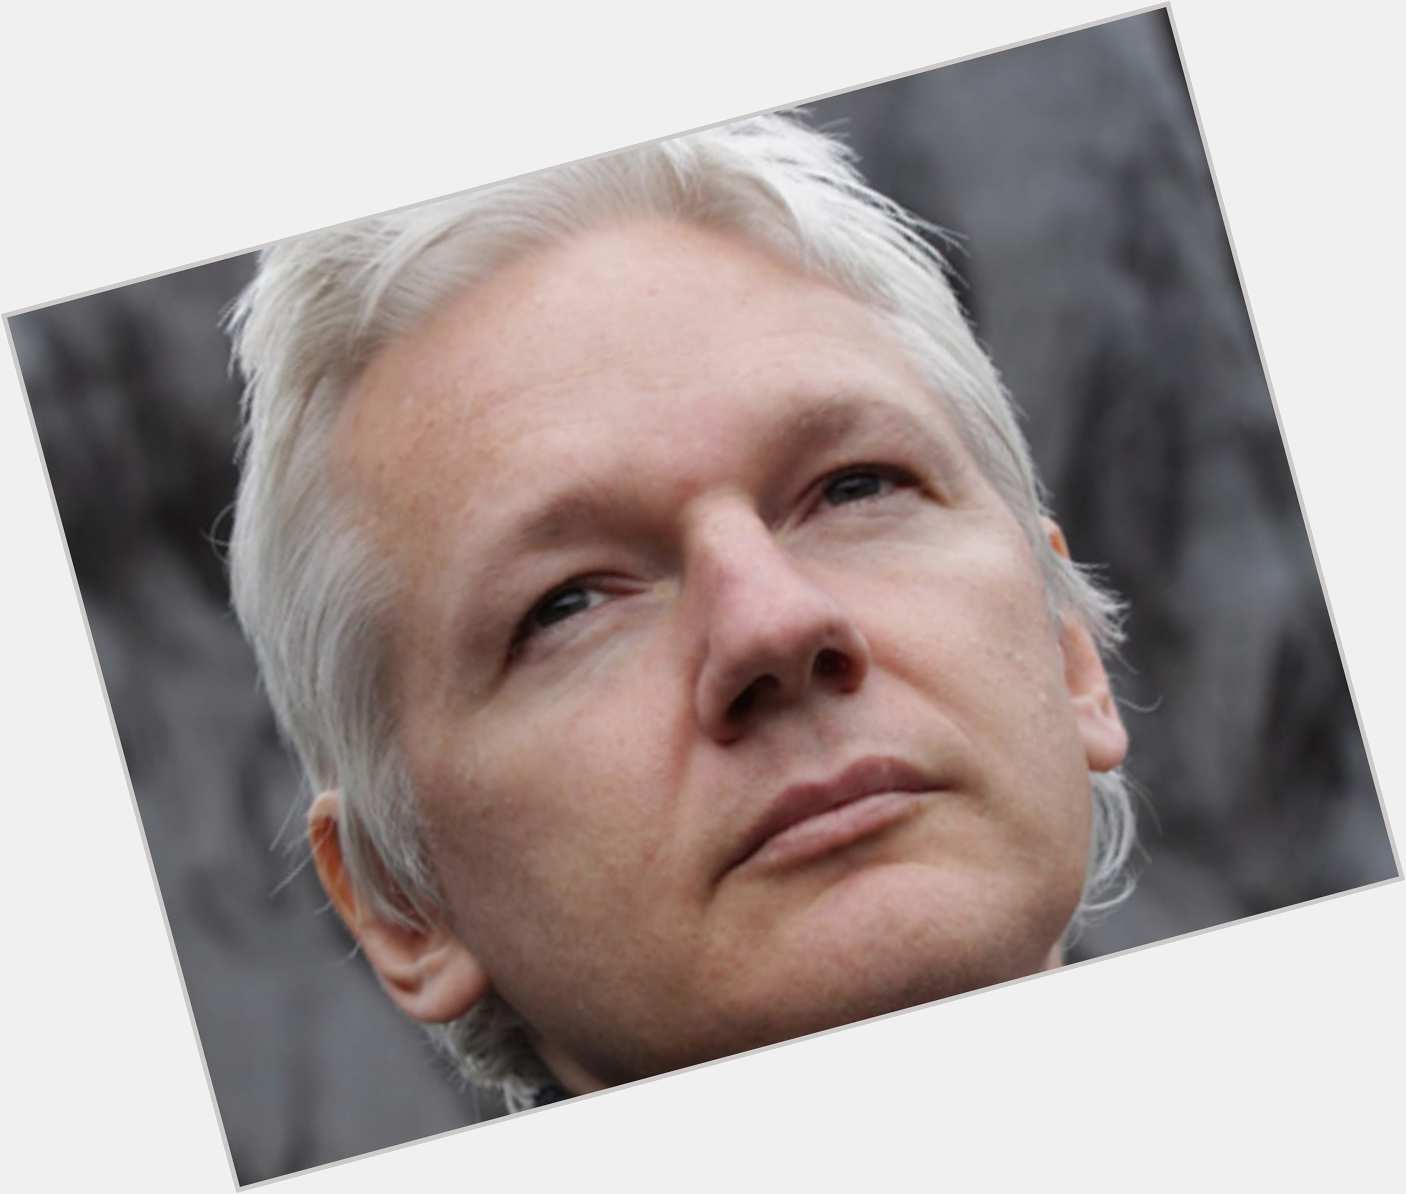         Julian
     Assange,
          Happy 
             Birthday!

. 